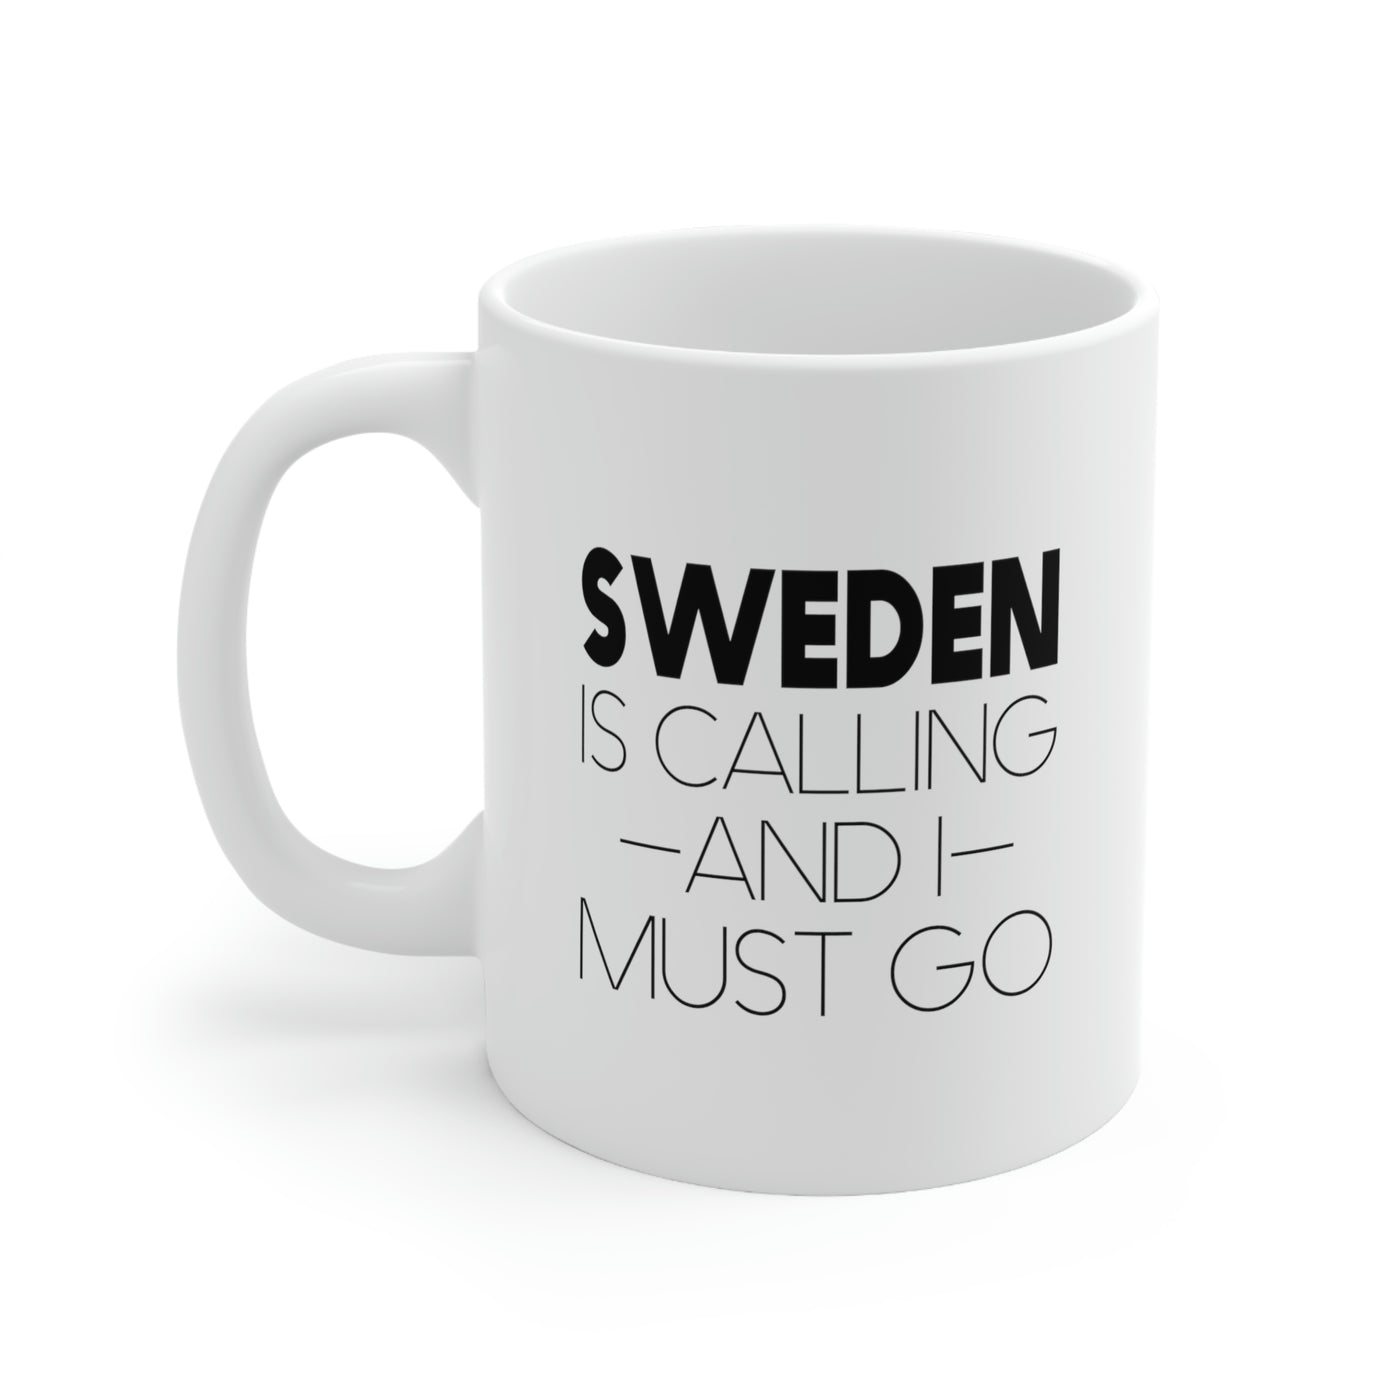 Sweden Is Calling And I Must Go Mug